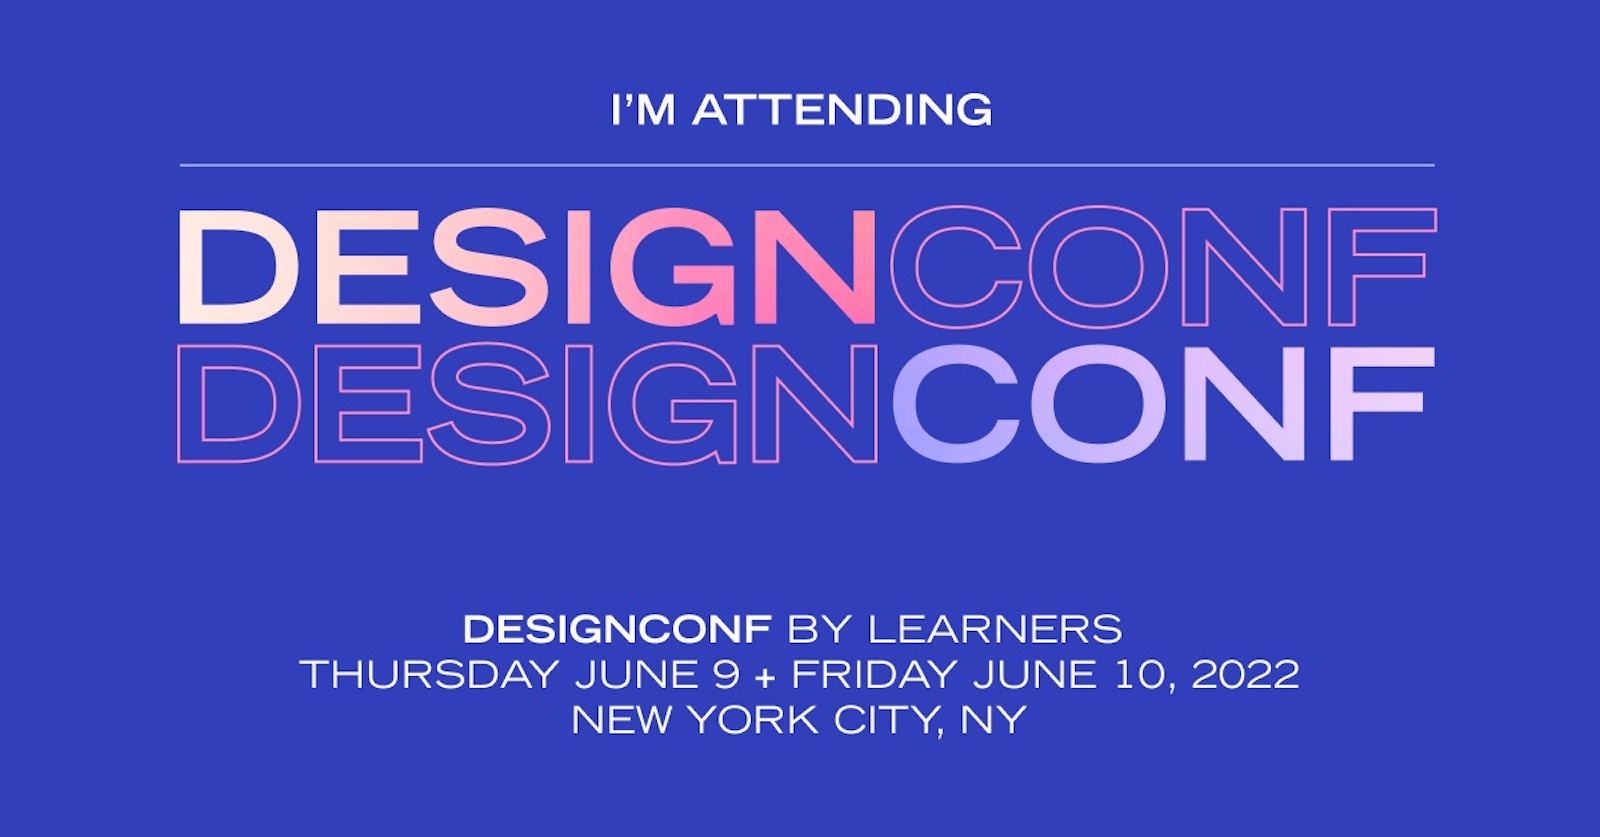 DesignConf By Learners 2022 attendance flyer